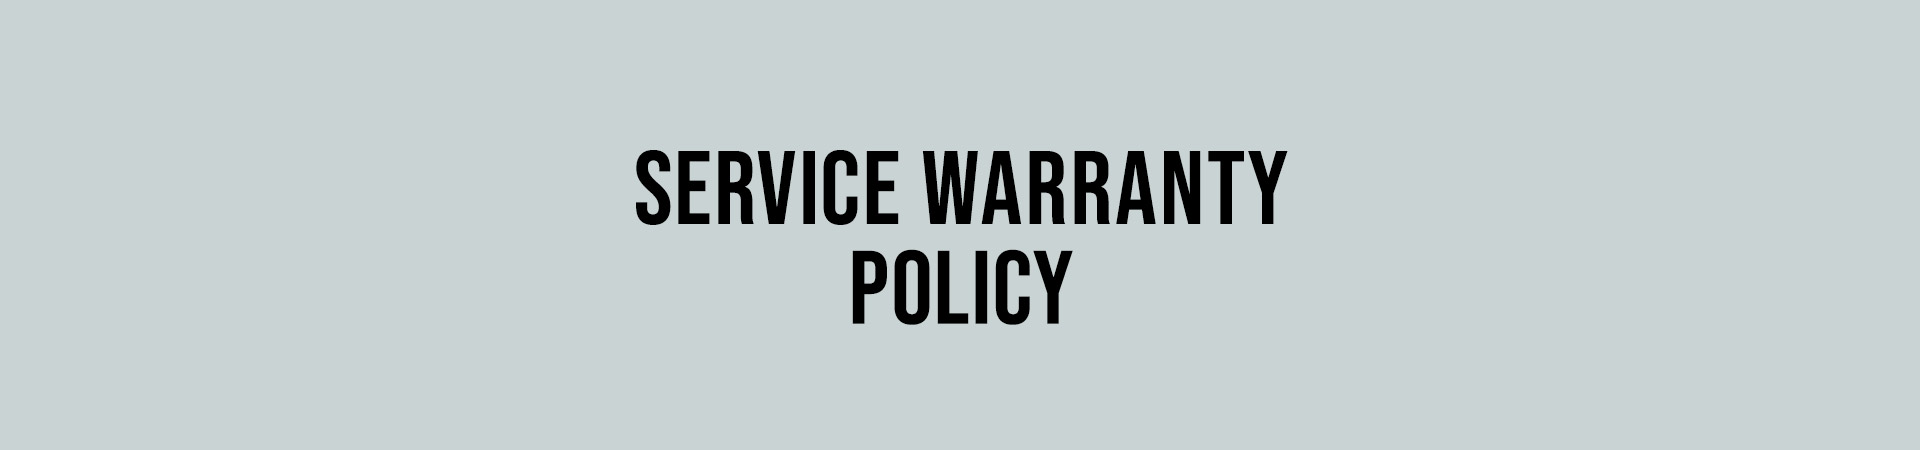 service warranty policy